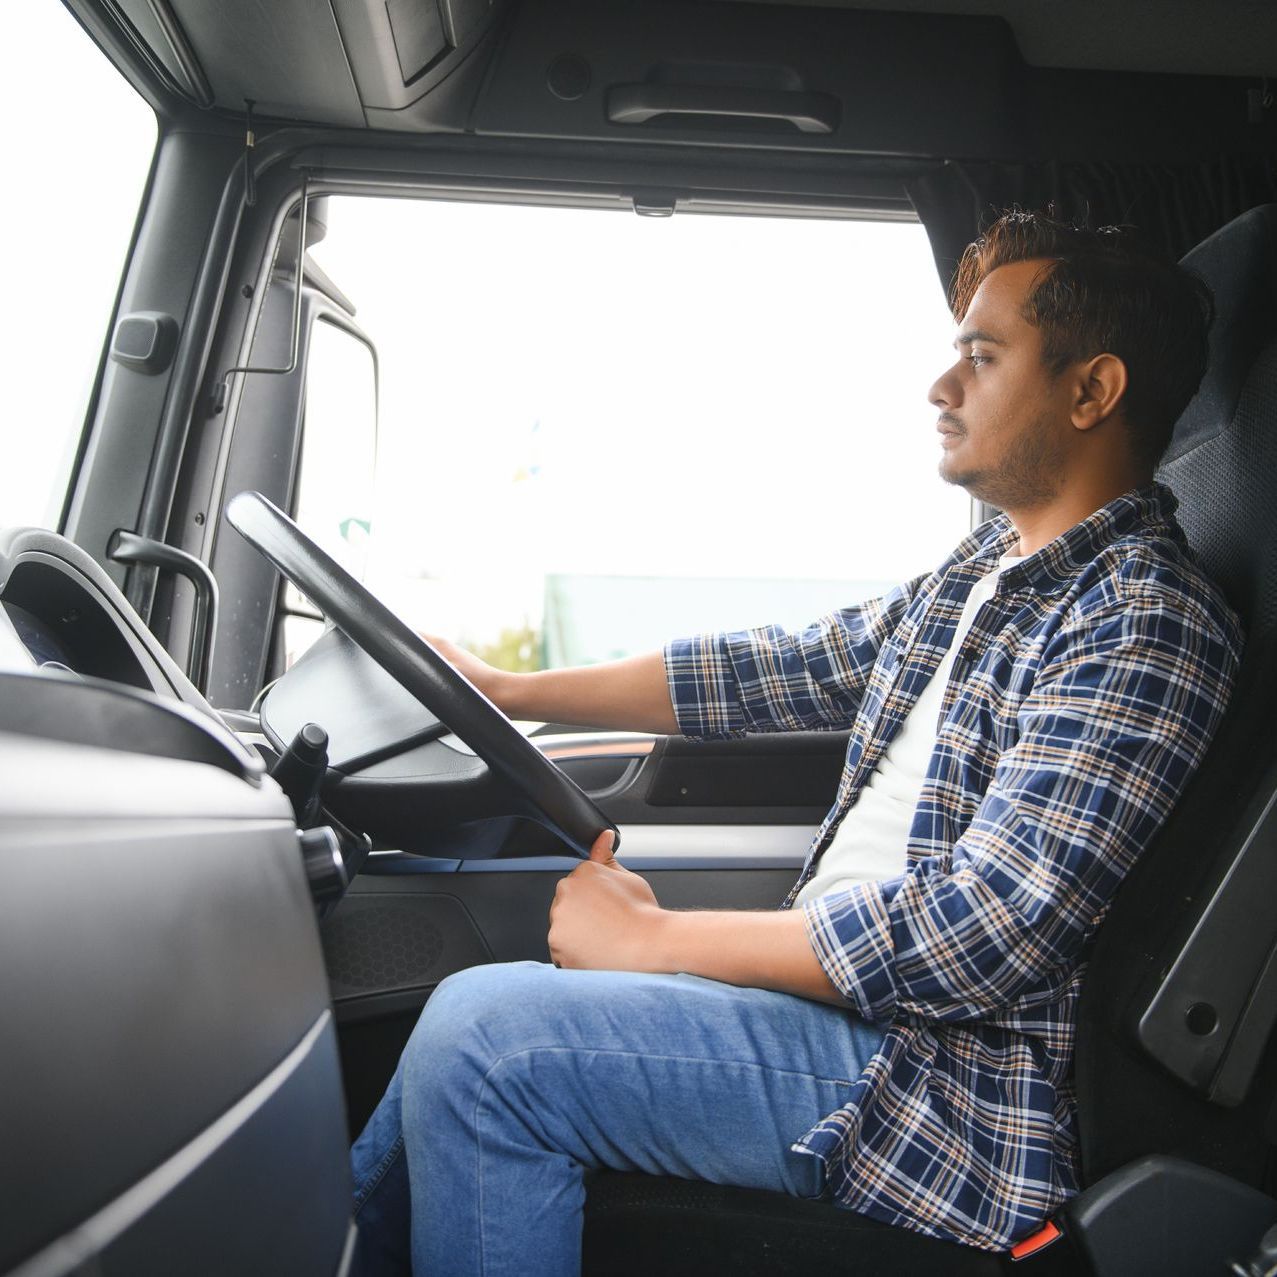 a man in a plaid shirt is driving a truck